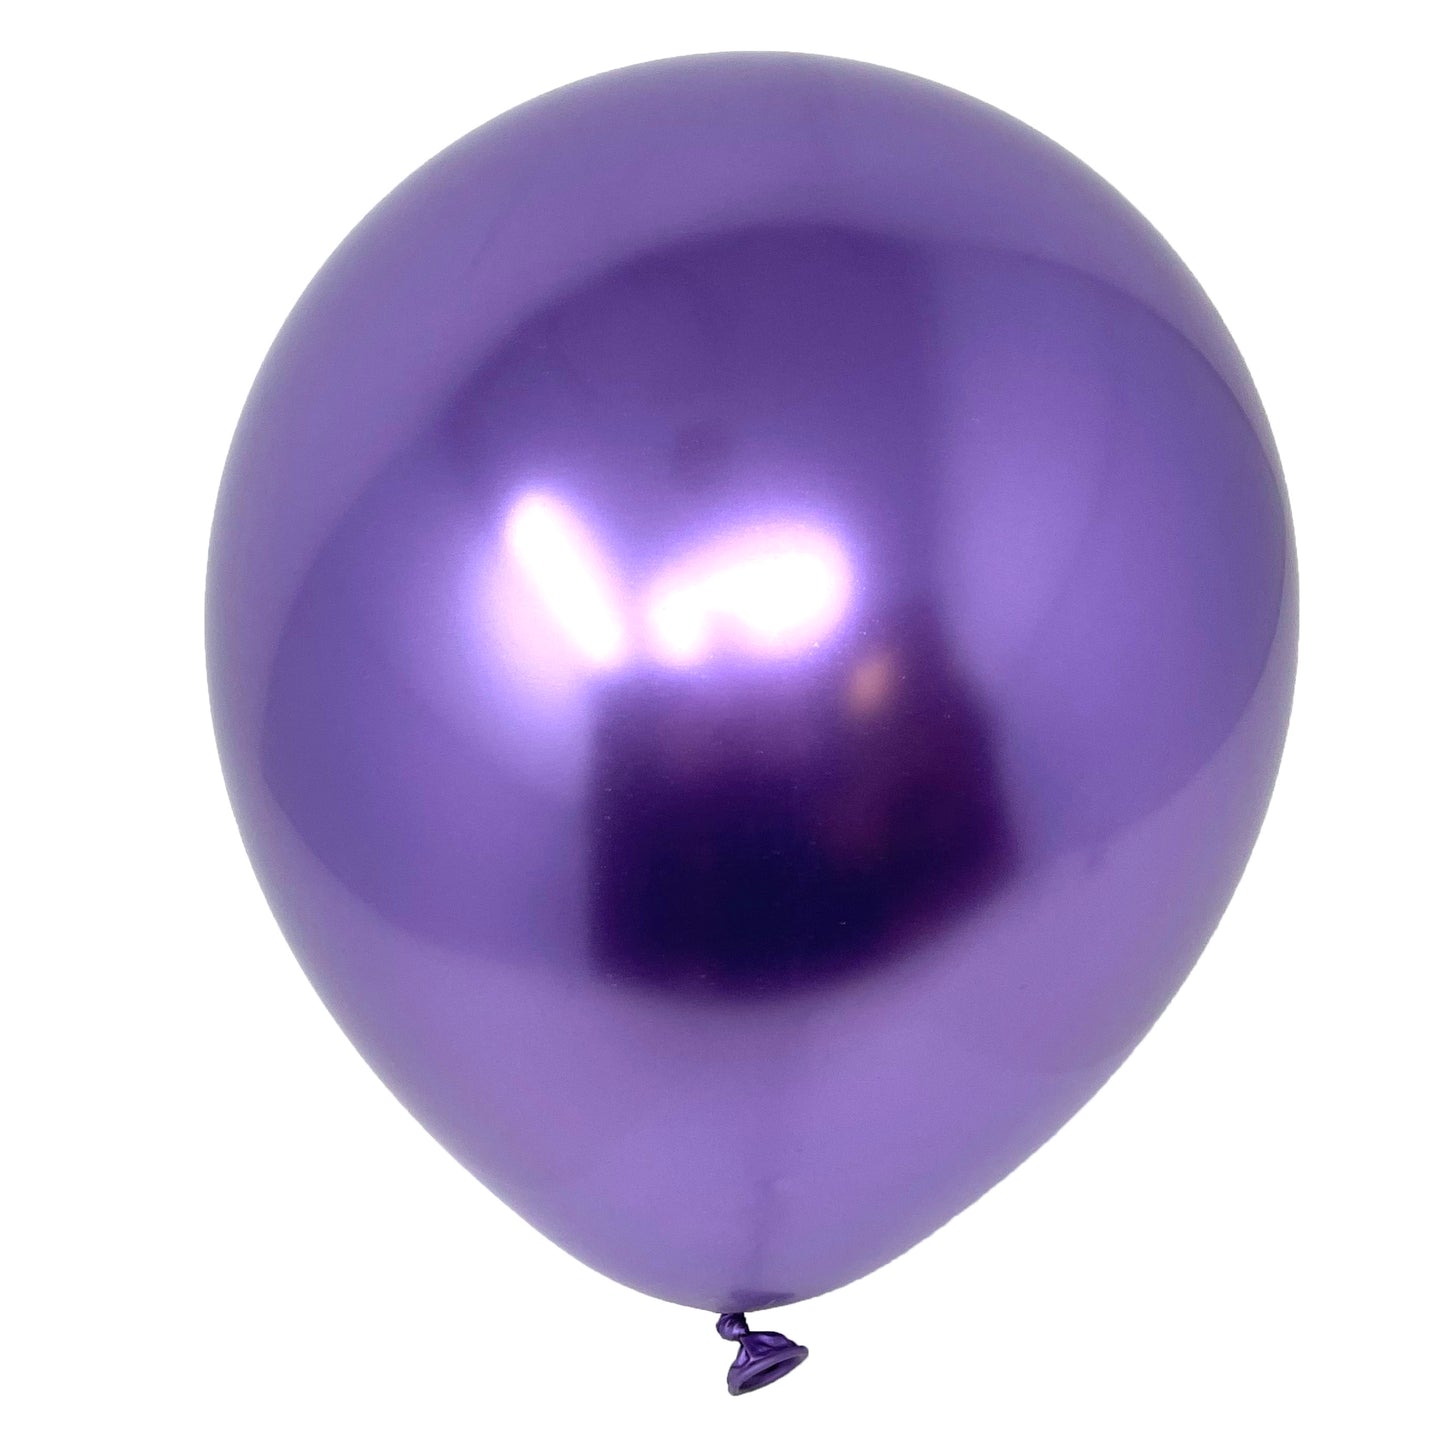 Allgala Balloons 12" 50 Count 2.8g Premium Heavy Metallic Chrome Latex Balloons